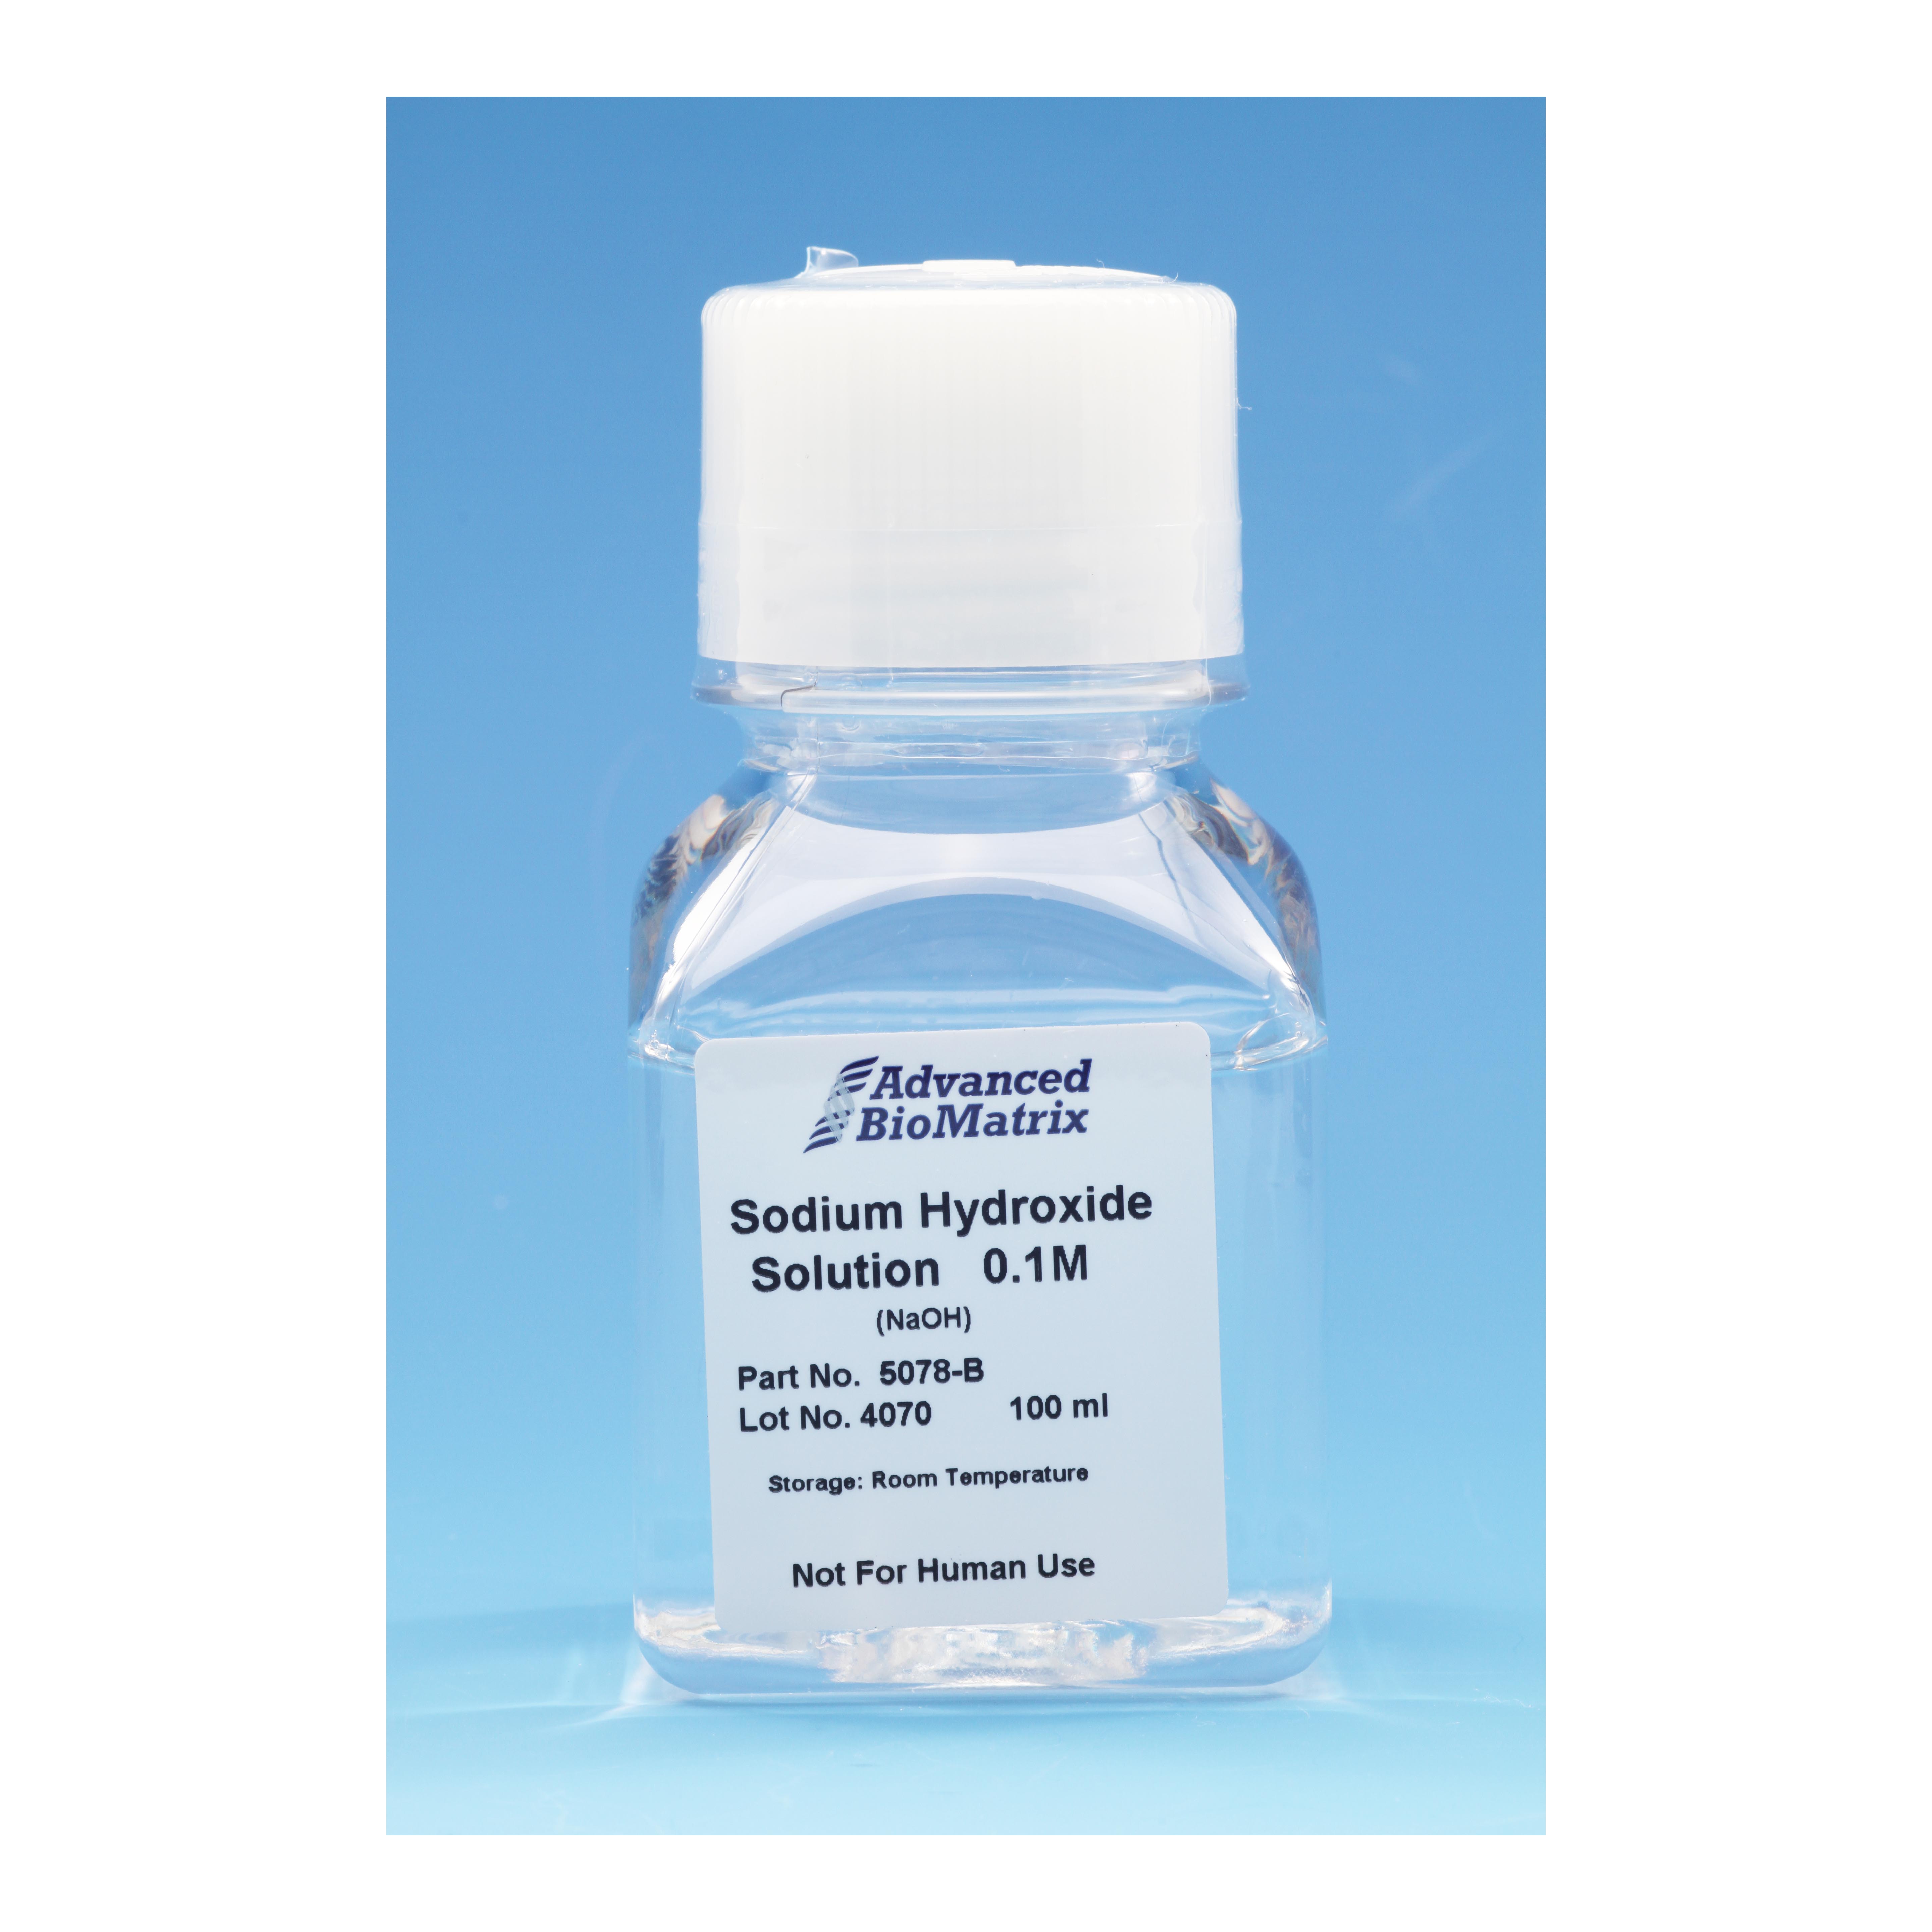 Sodium Hydroxide (NaOH)